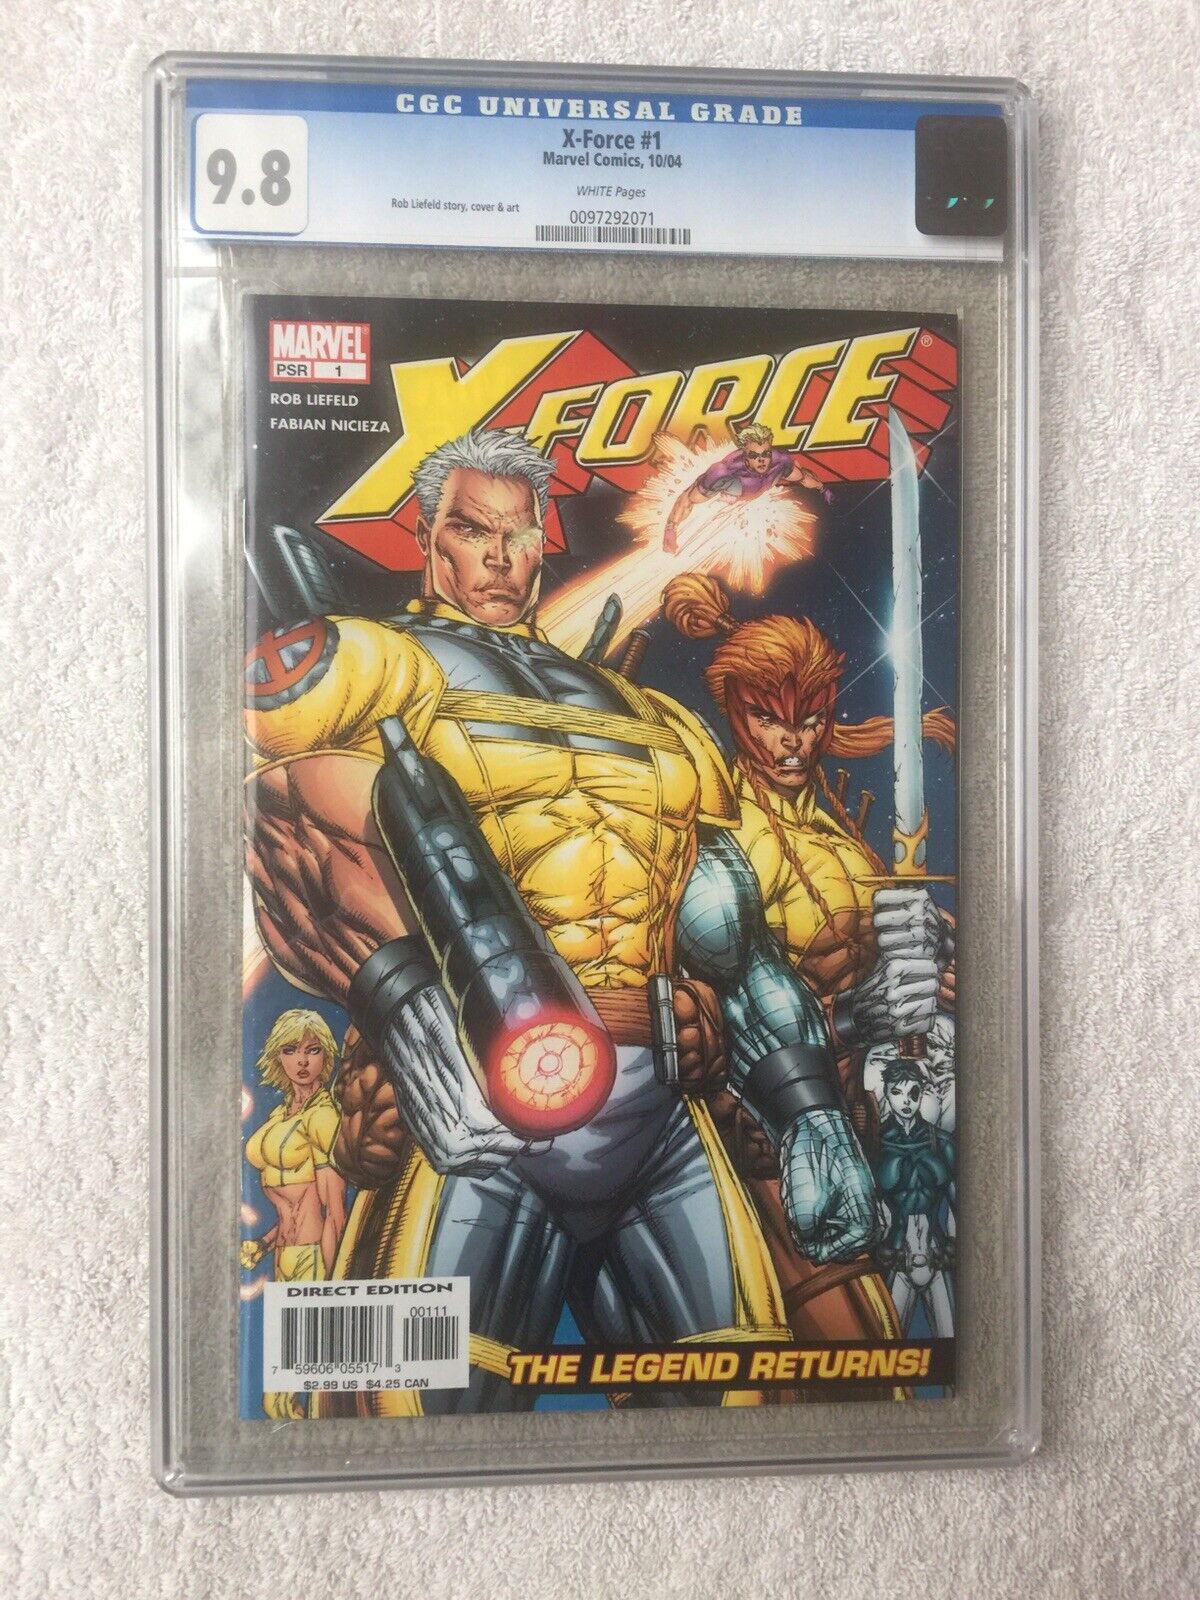 X-Force #1 Marvel October 2004 CGC 9.8 NM/MT Rob Liefeld with free 6 books bonus